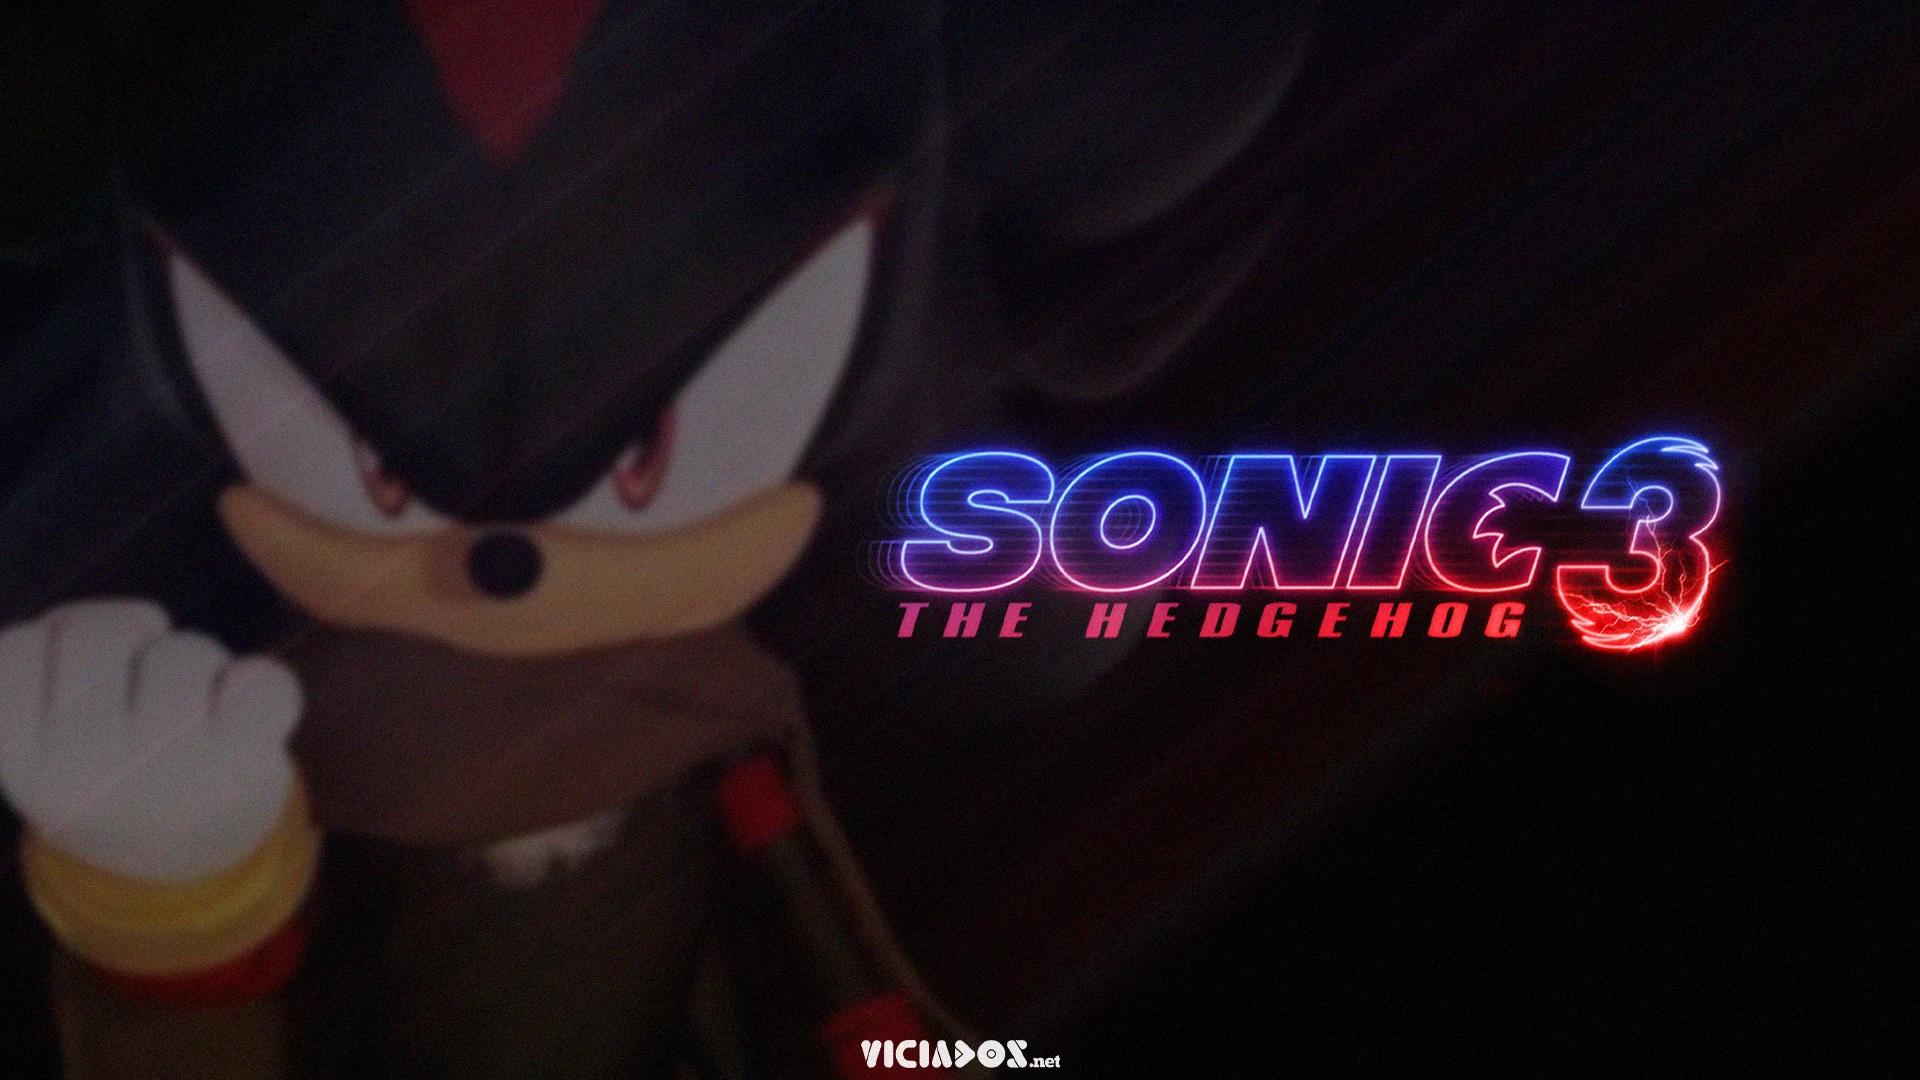 Sonic 3: O Filme | Data de lançamento, rumores e suposto enredo 1